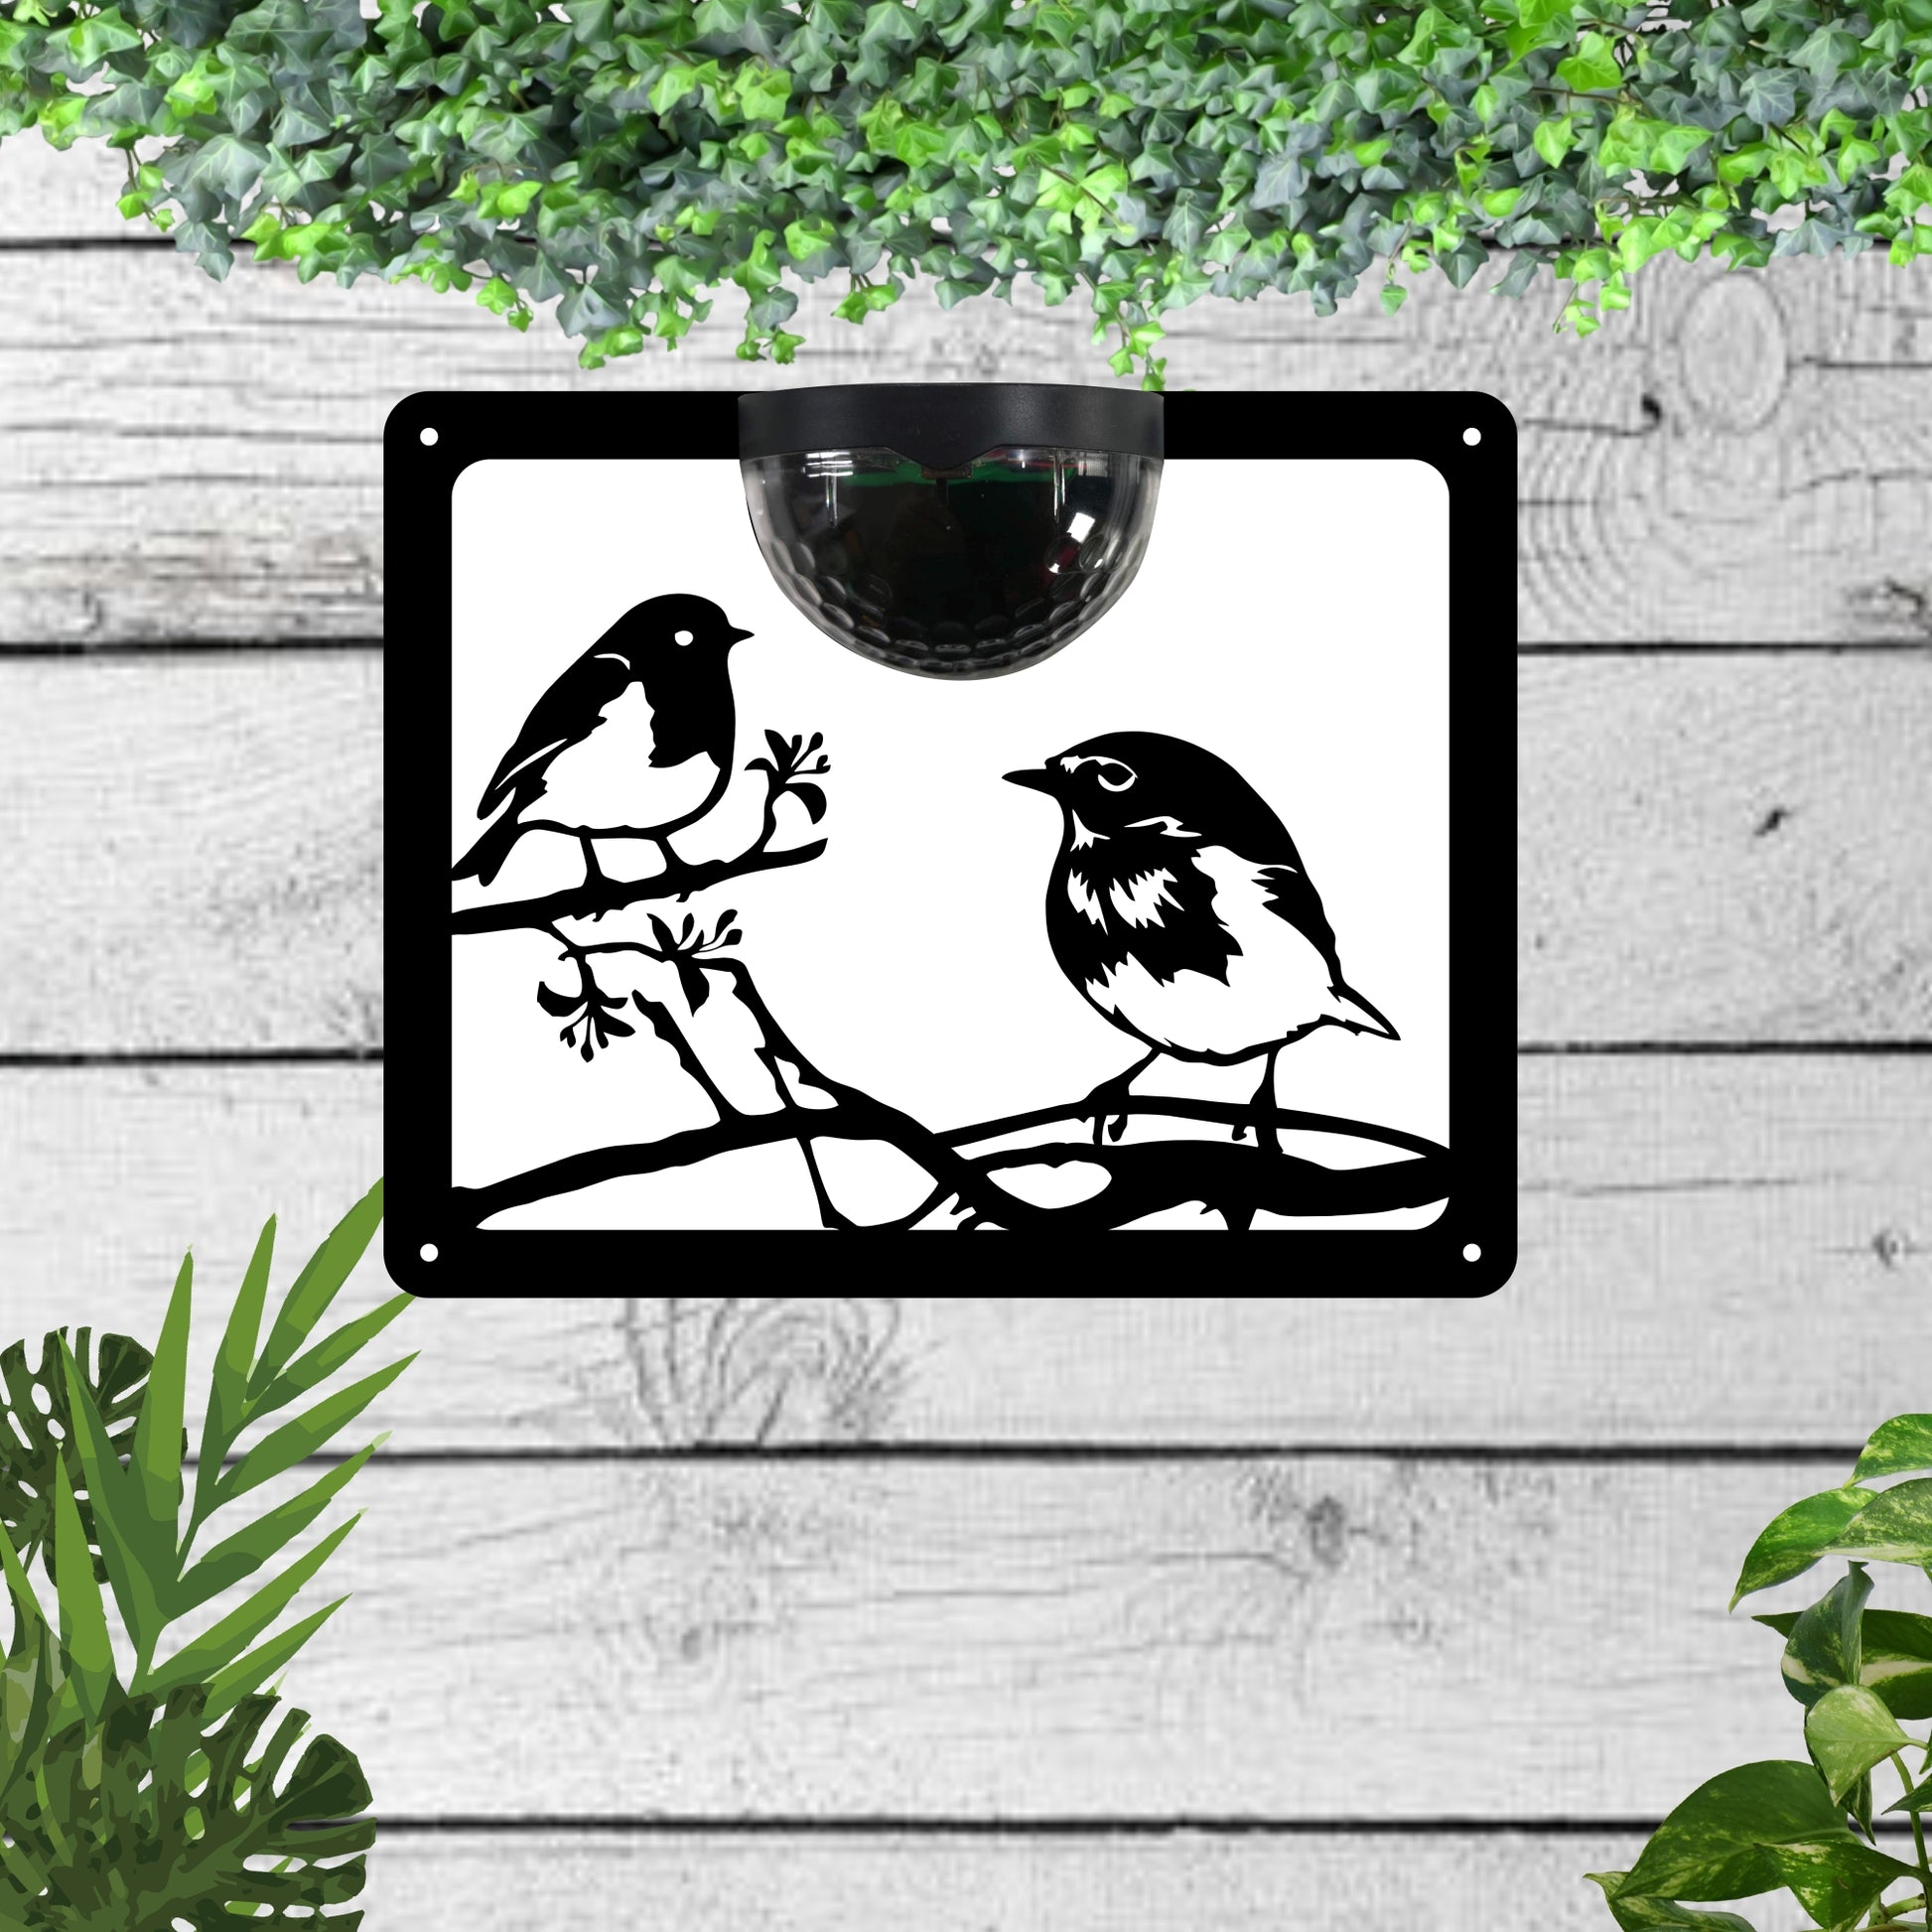 Garden Solar Light Wall Plaque featuring a Robin and chick | John Alans